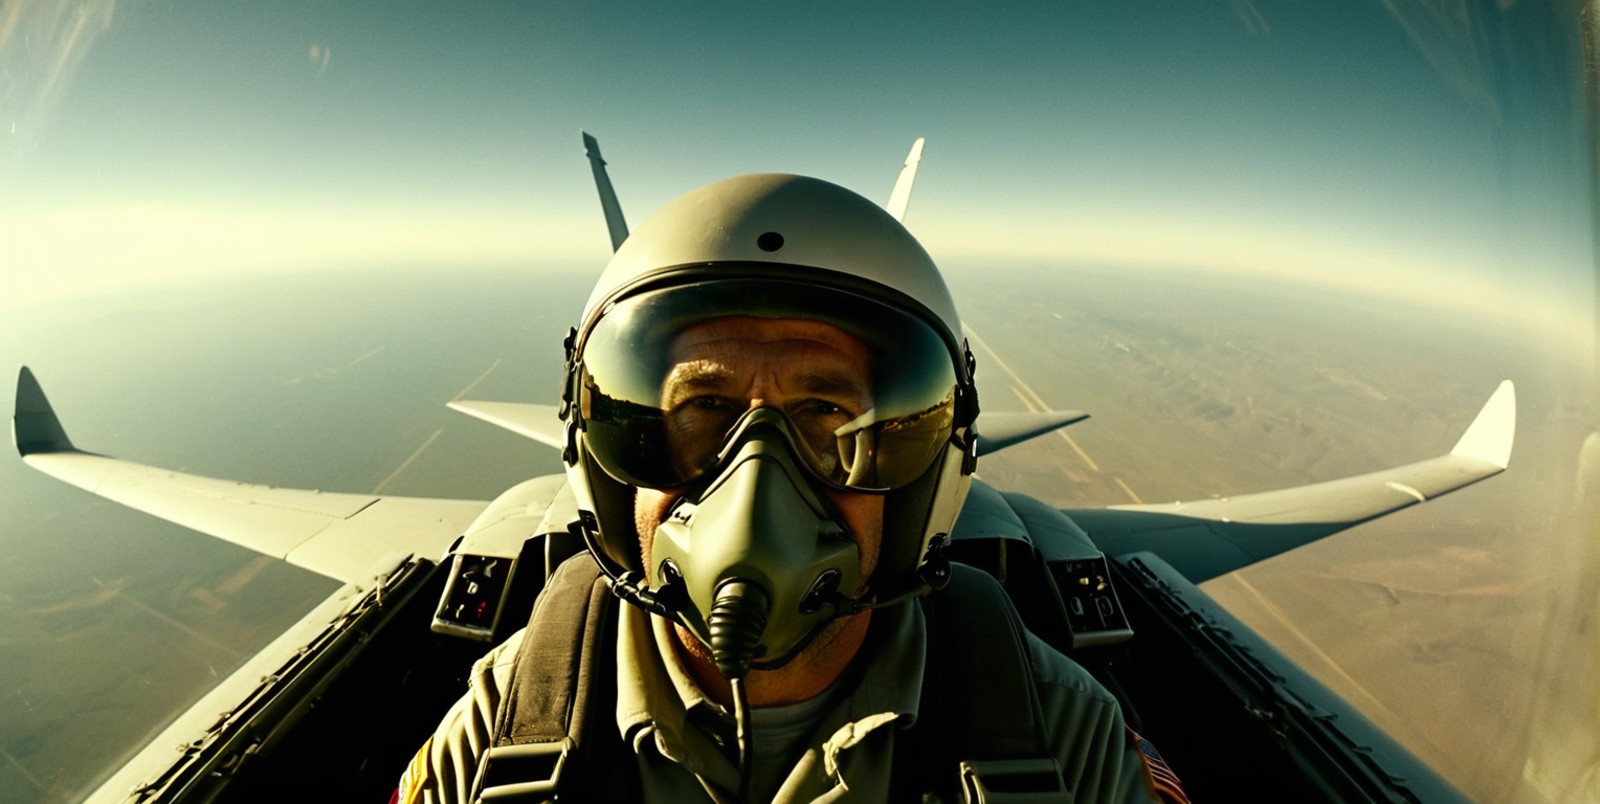 cinematic, military jet, close-up, pilot, window, ultra detailed, film grain, motion blur, <lora:CinematicStyle_v1:.7>